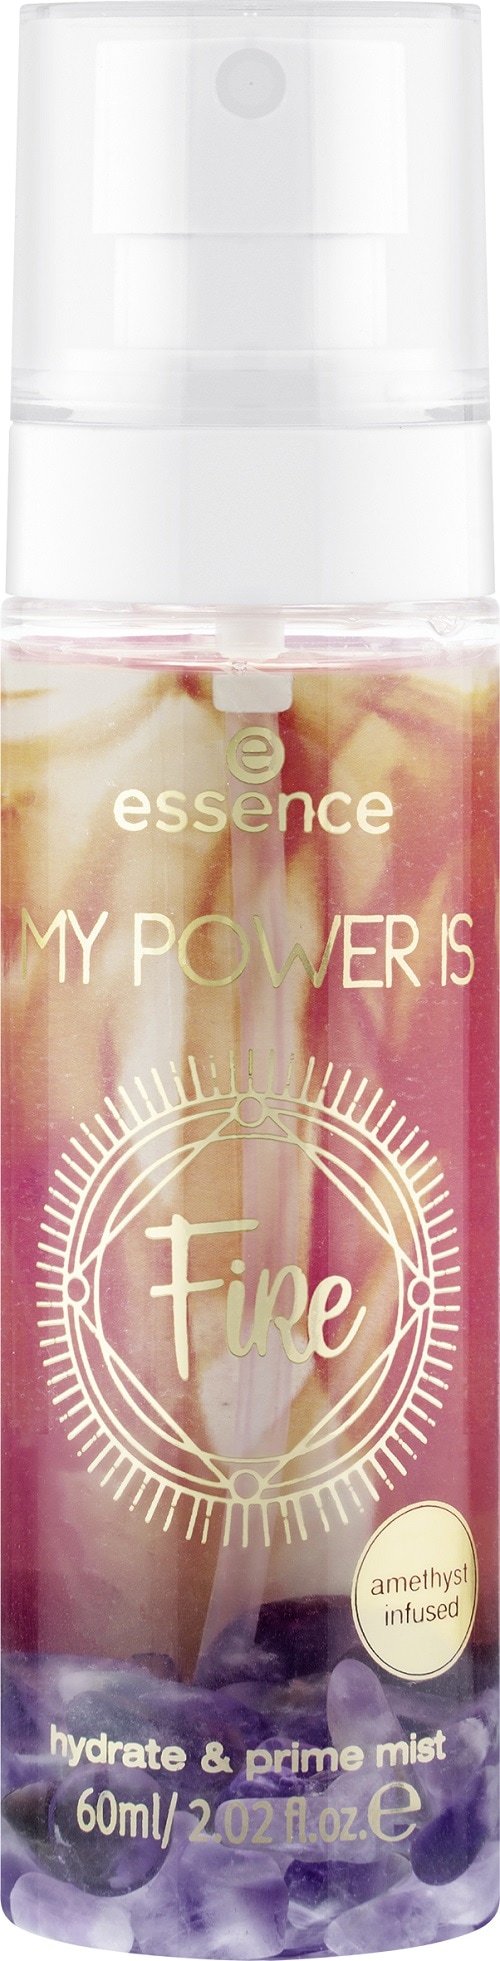 essence MY POWER IS FiRe hydrate & prime mist 03